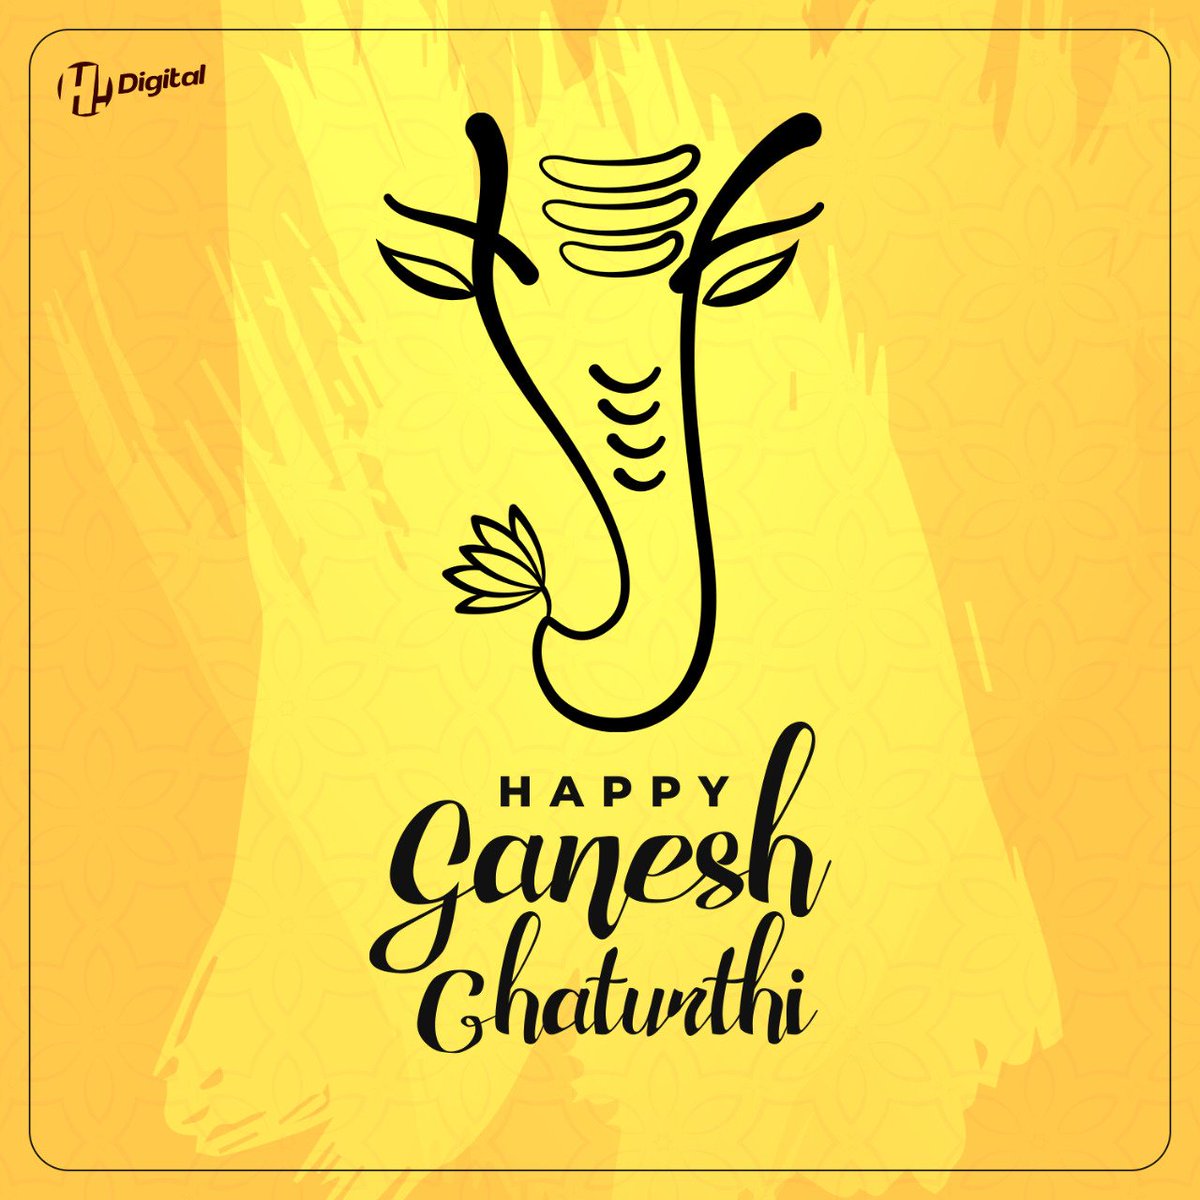 Enhance your Happiness &  Create Goodness all around you! Team @_HiDigital  Wishing Everyone a Happy Vinayak Chaturthi! 

#HappyGaneshChaturthi